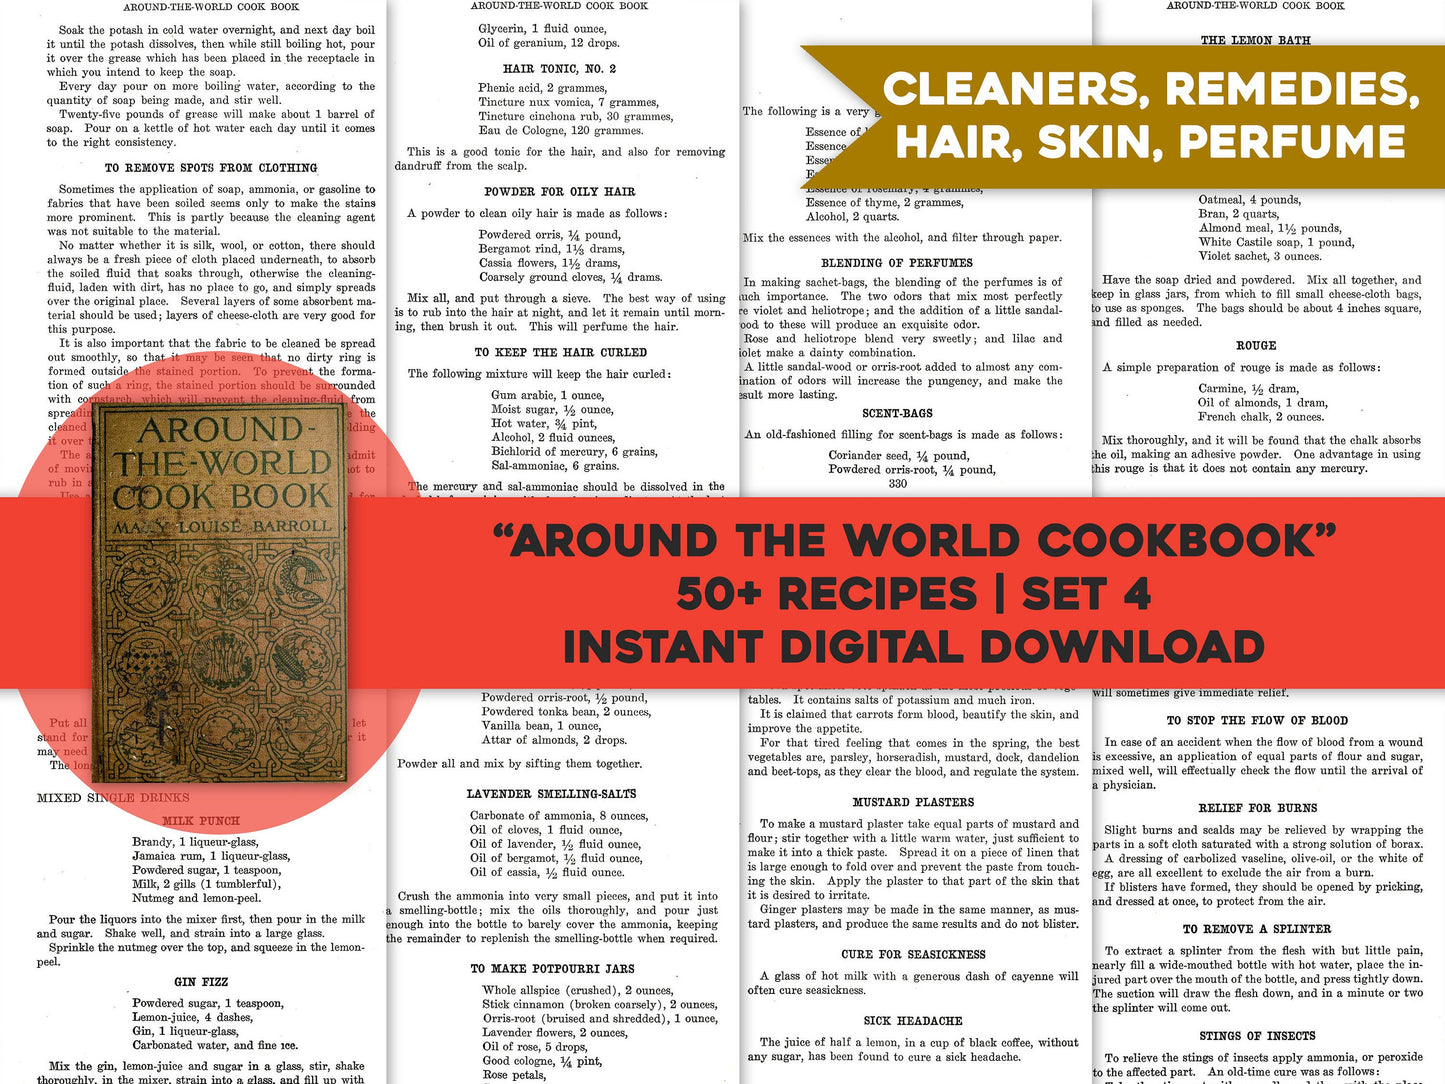 Around the World Cookbook Set 4 Hair Skin Perfume Recipes [39 Images]